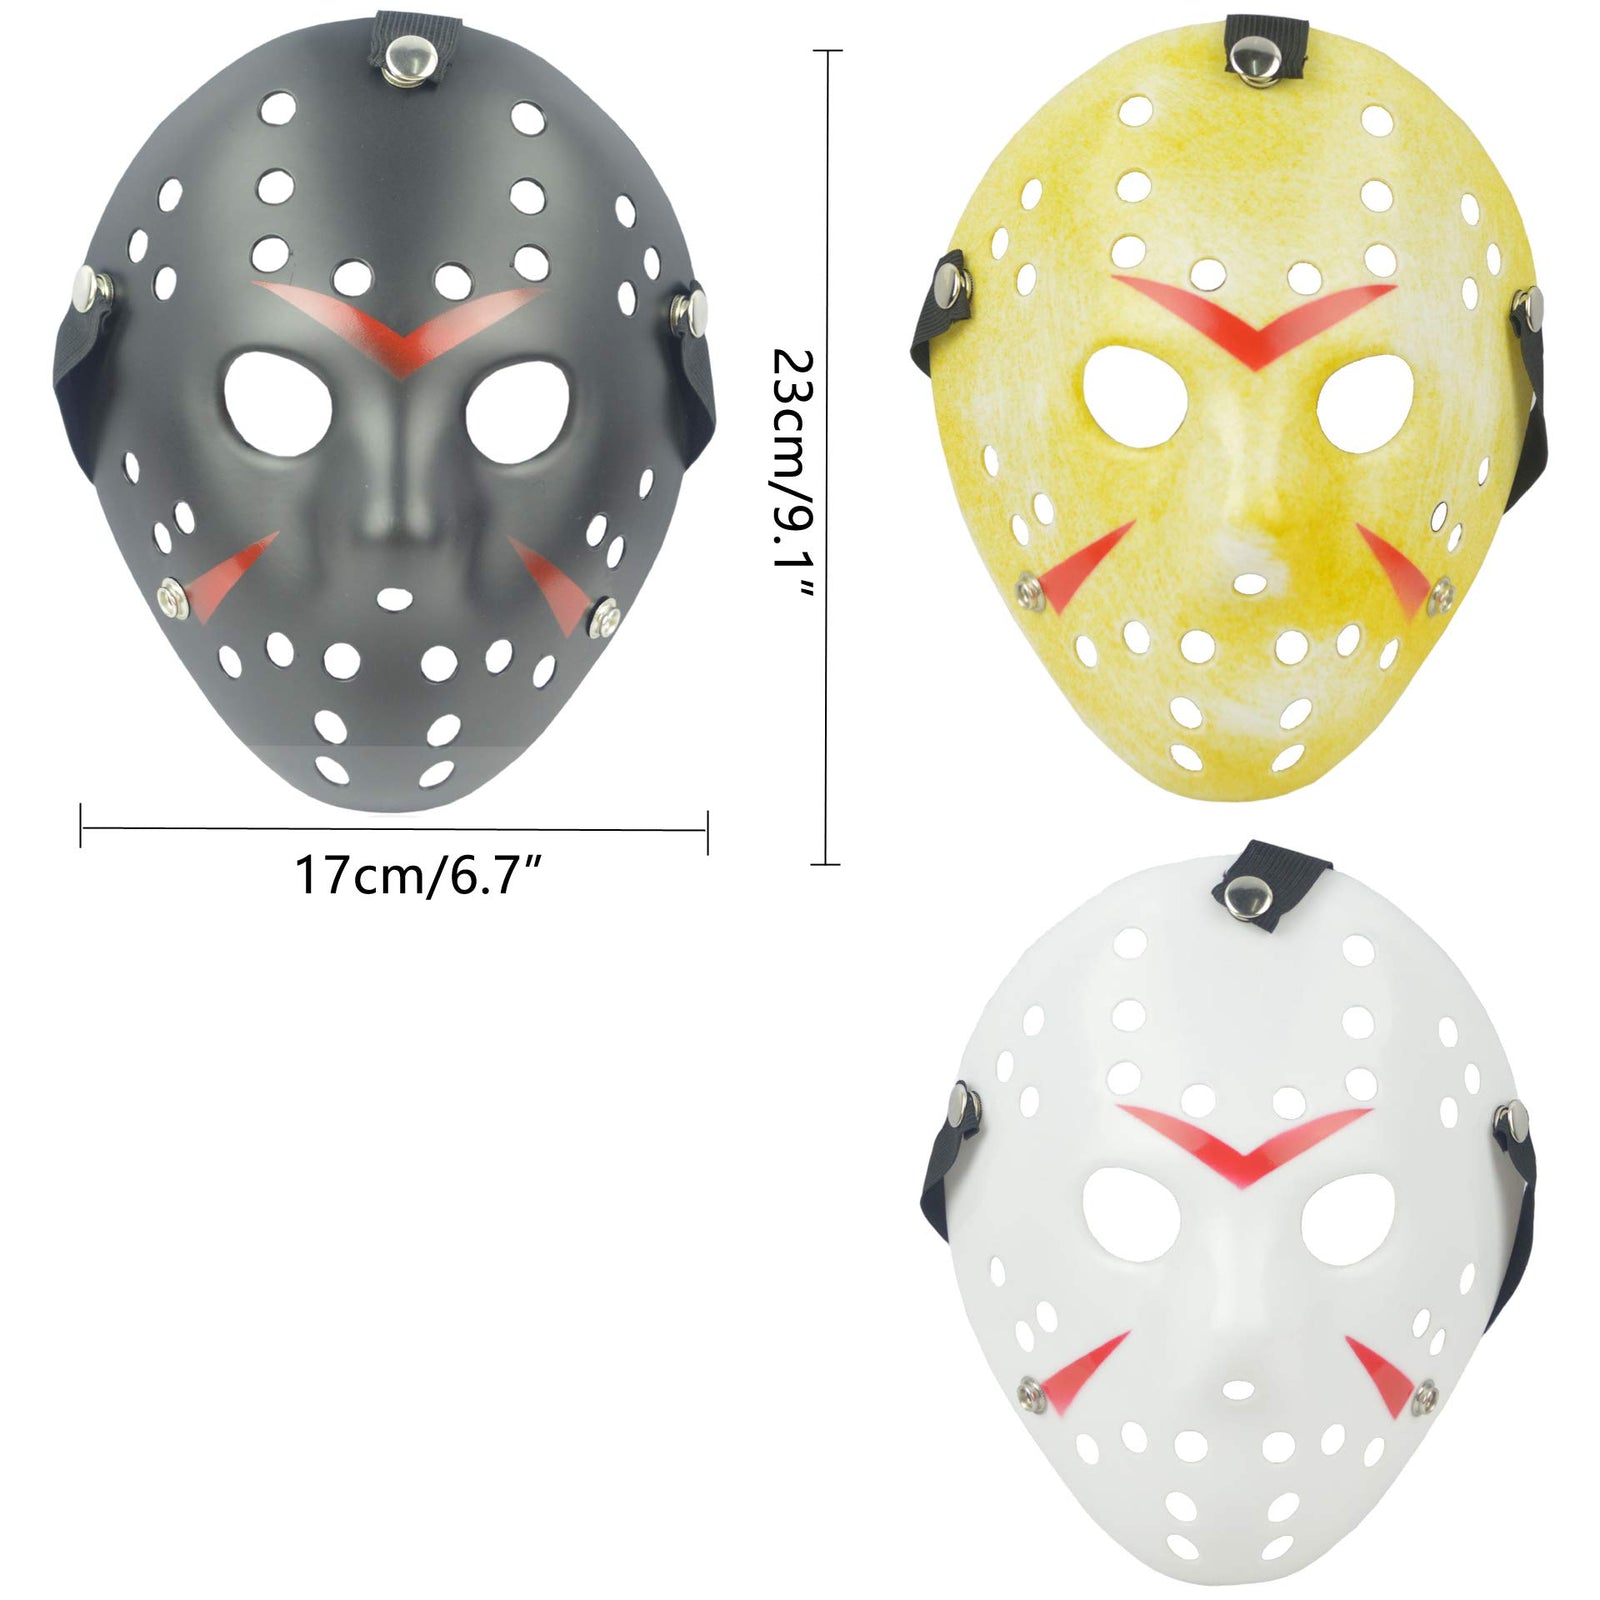 IronBuddy 3Pcs Jason Hockey Mask Costume Mask Prop for Cosplay Masquerade Party Halloween Decorations Dress Up